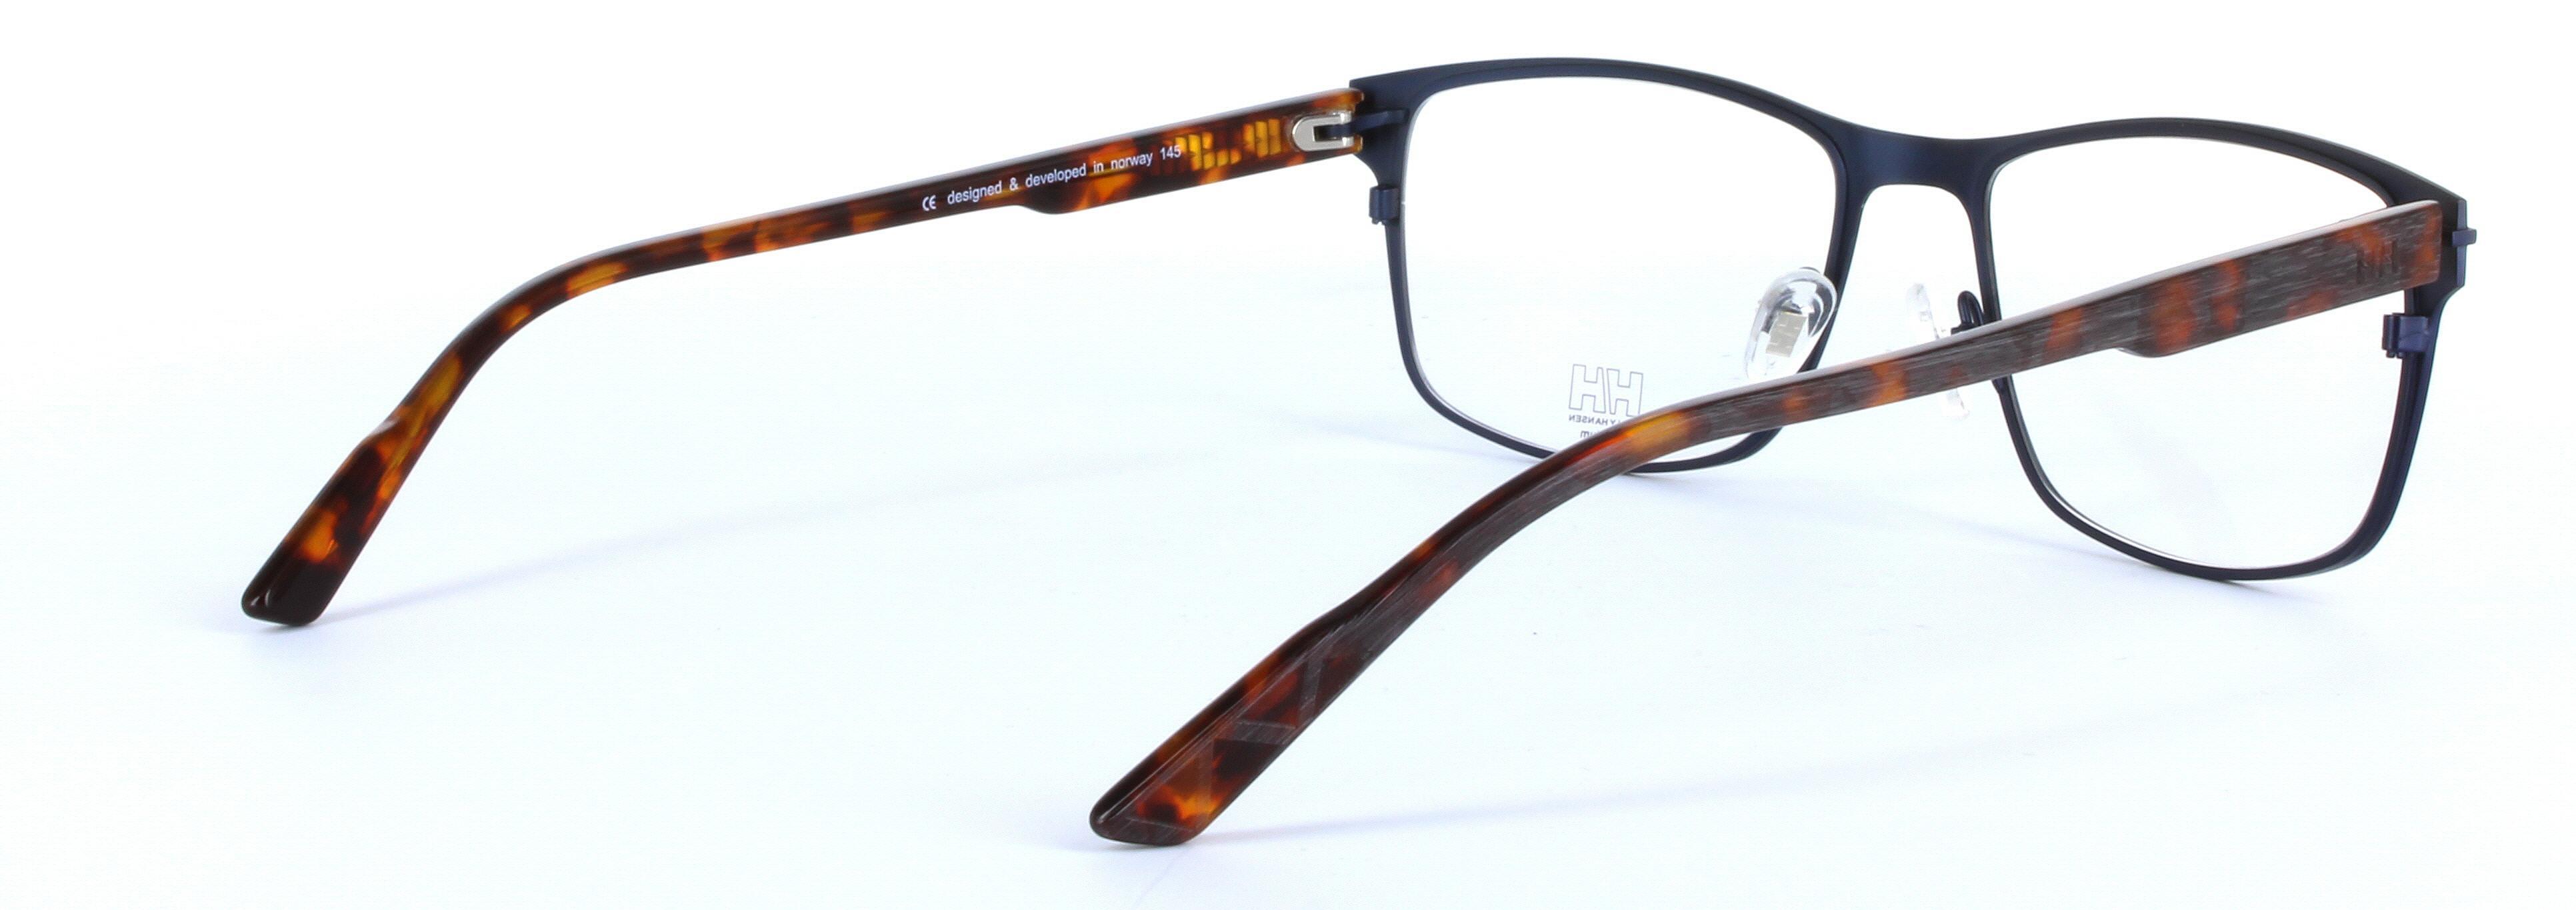 Helly Hansen HH 1019 Brown Full Rim Rectangular Square Metal Glasses - Image View 4